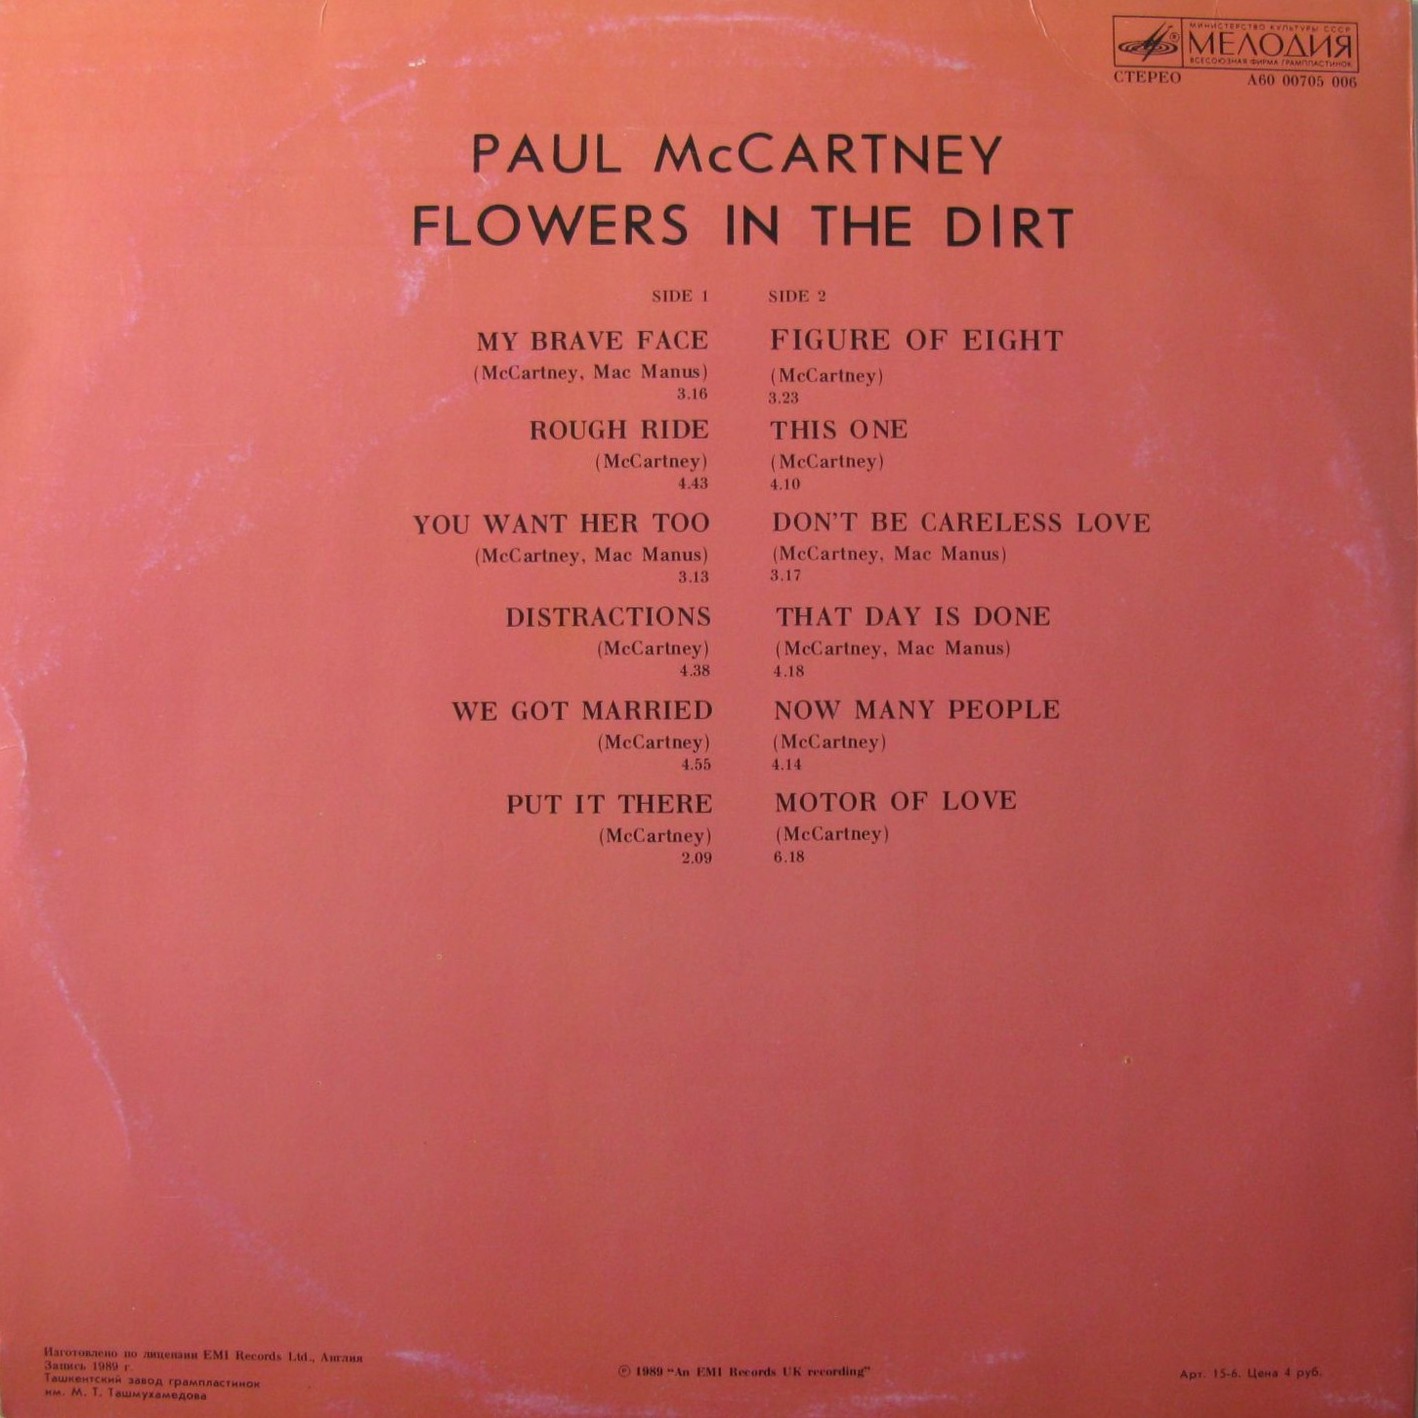 Paul McCartney - Flowers in the dirt